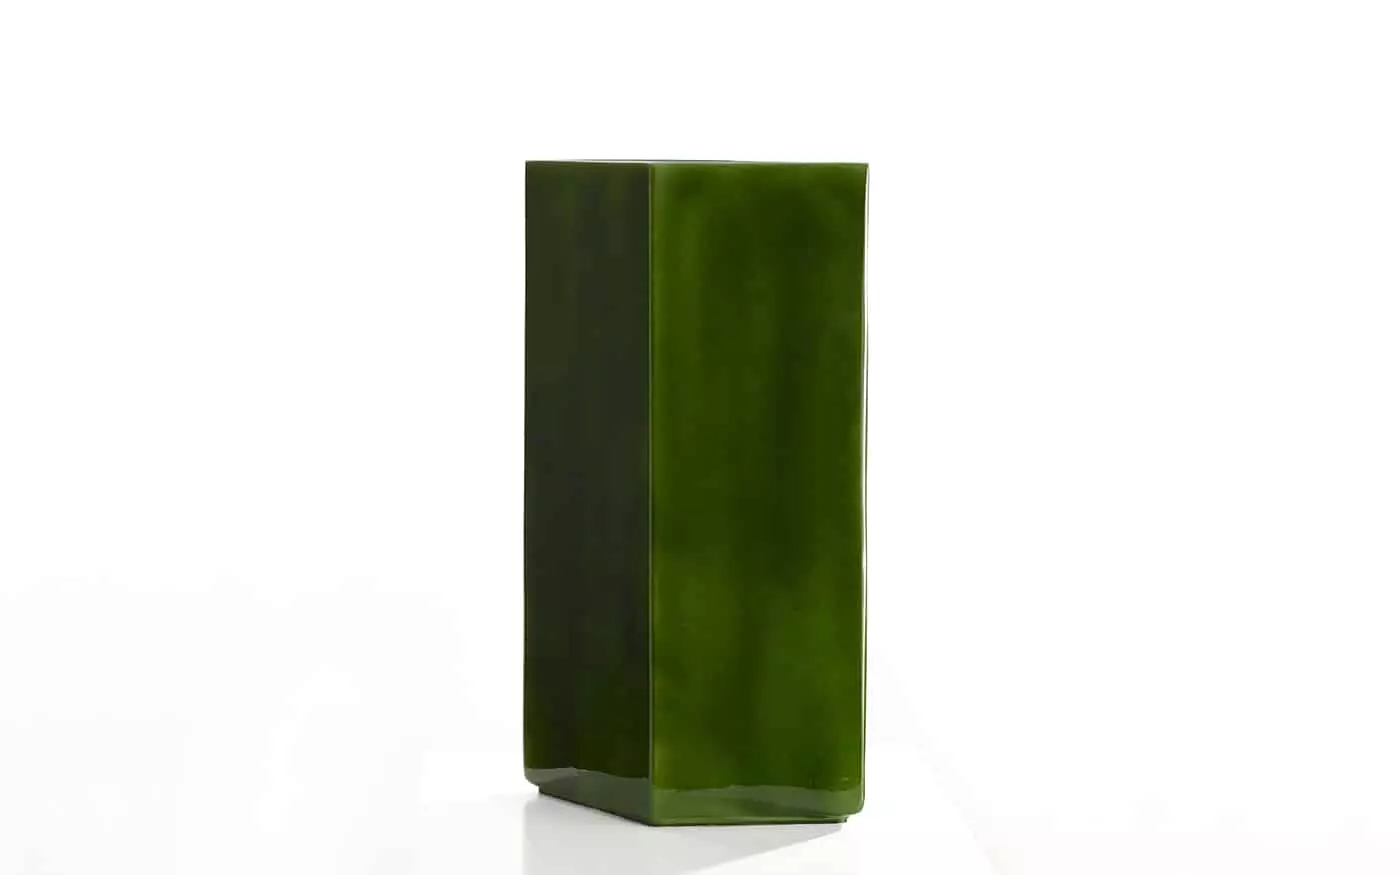 Vase Losange 84 green - Ronan and Erwan Bouroullec - Azo.